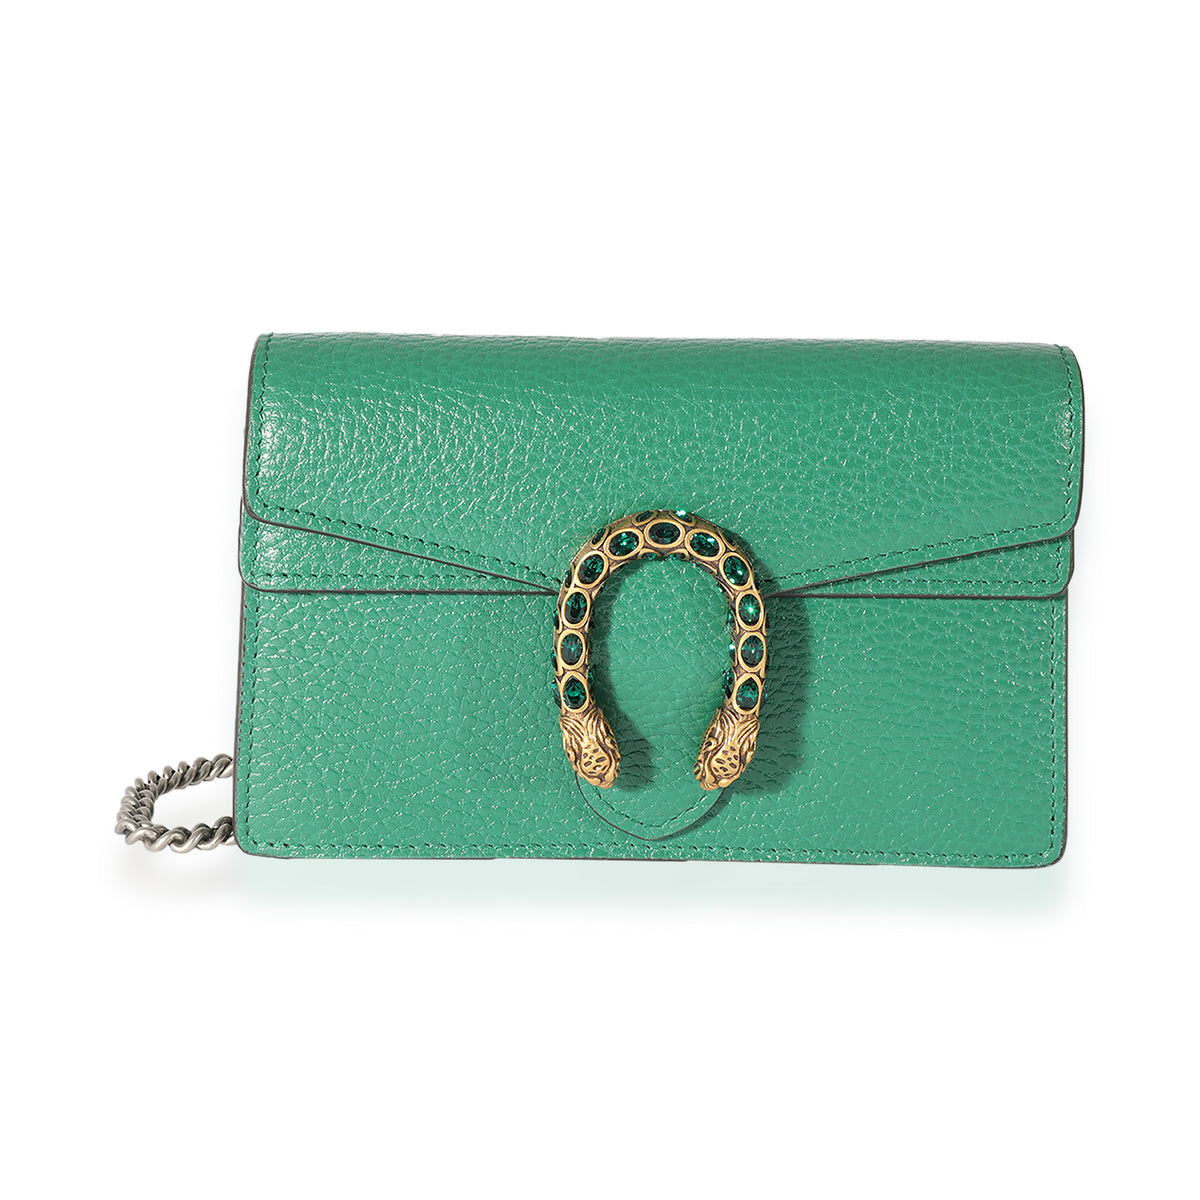 Gucci Dionysus Small Leather Shoulder Bag Emerald